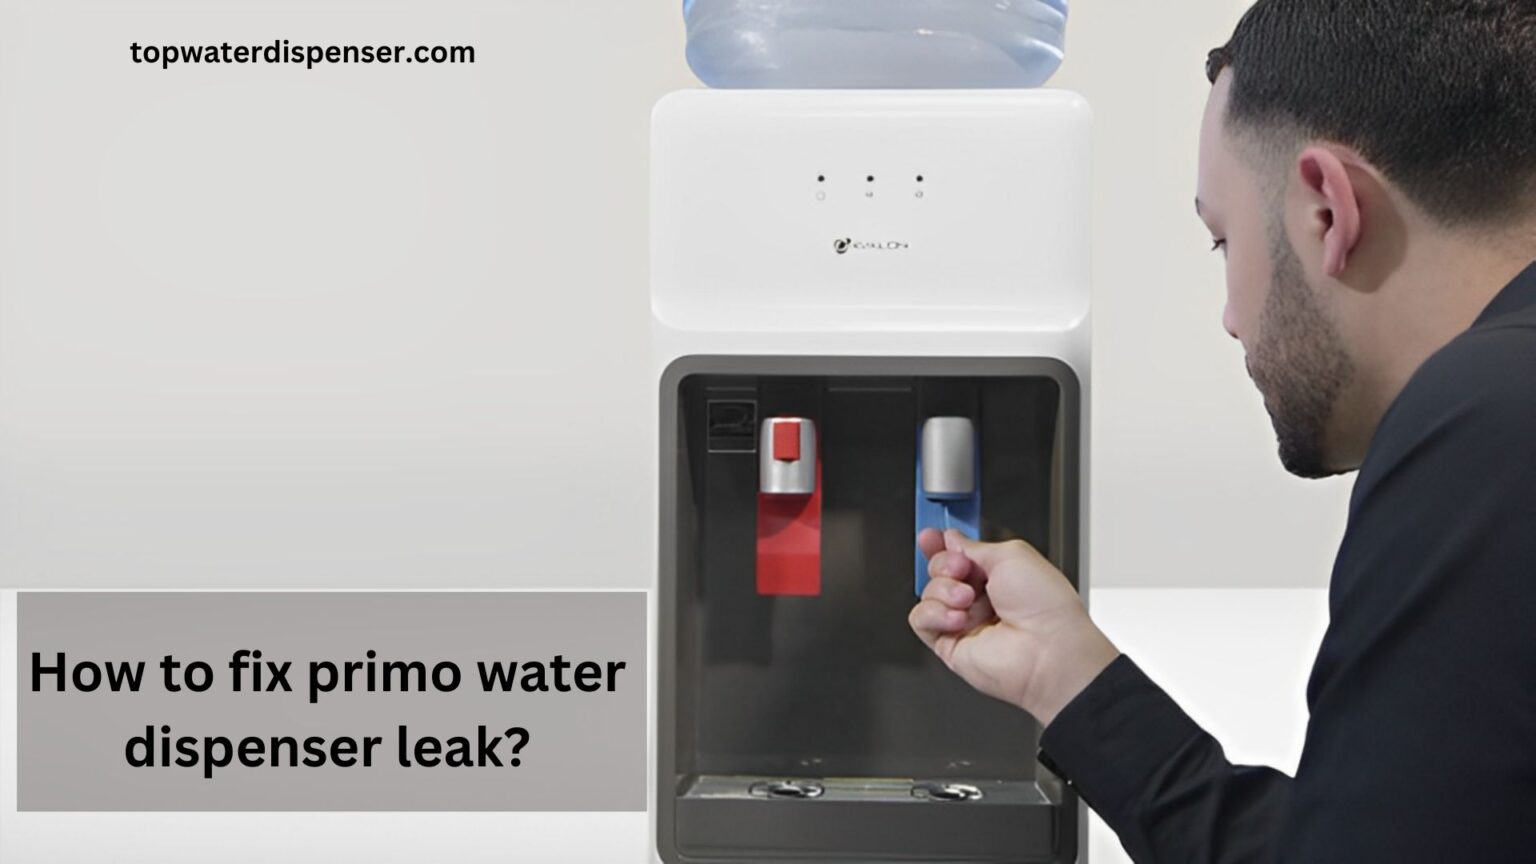 How to fix primo water dispenser leak?